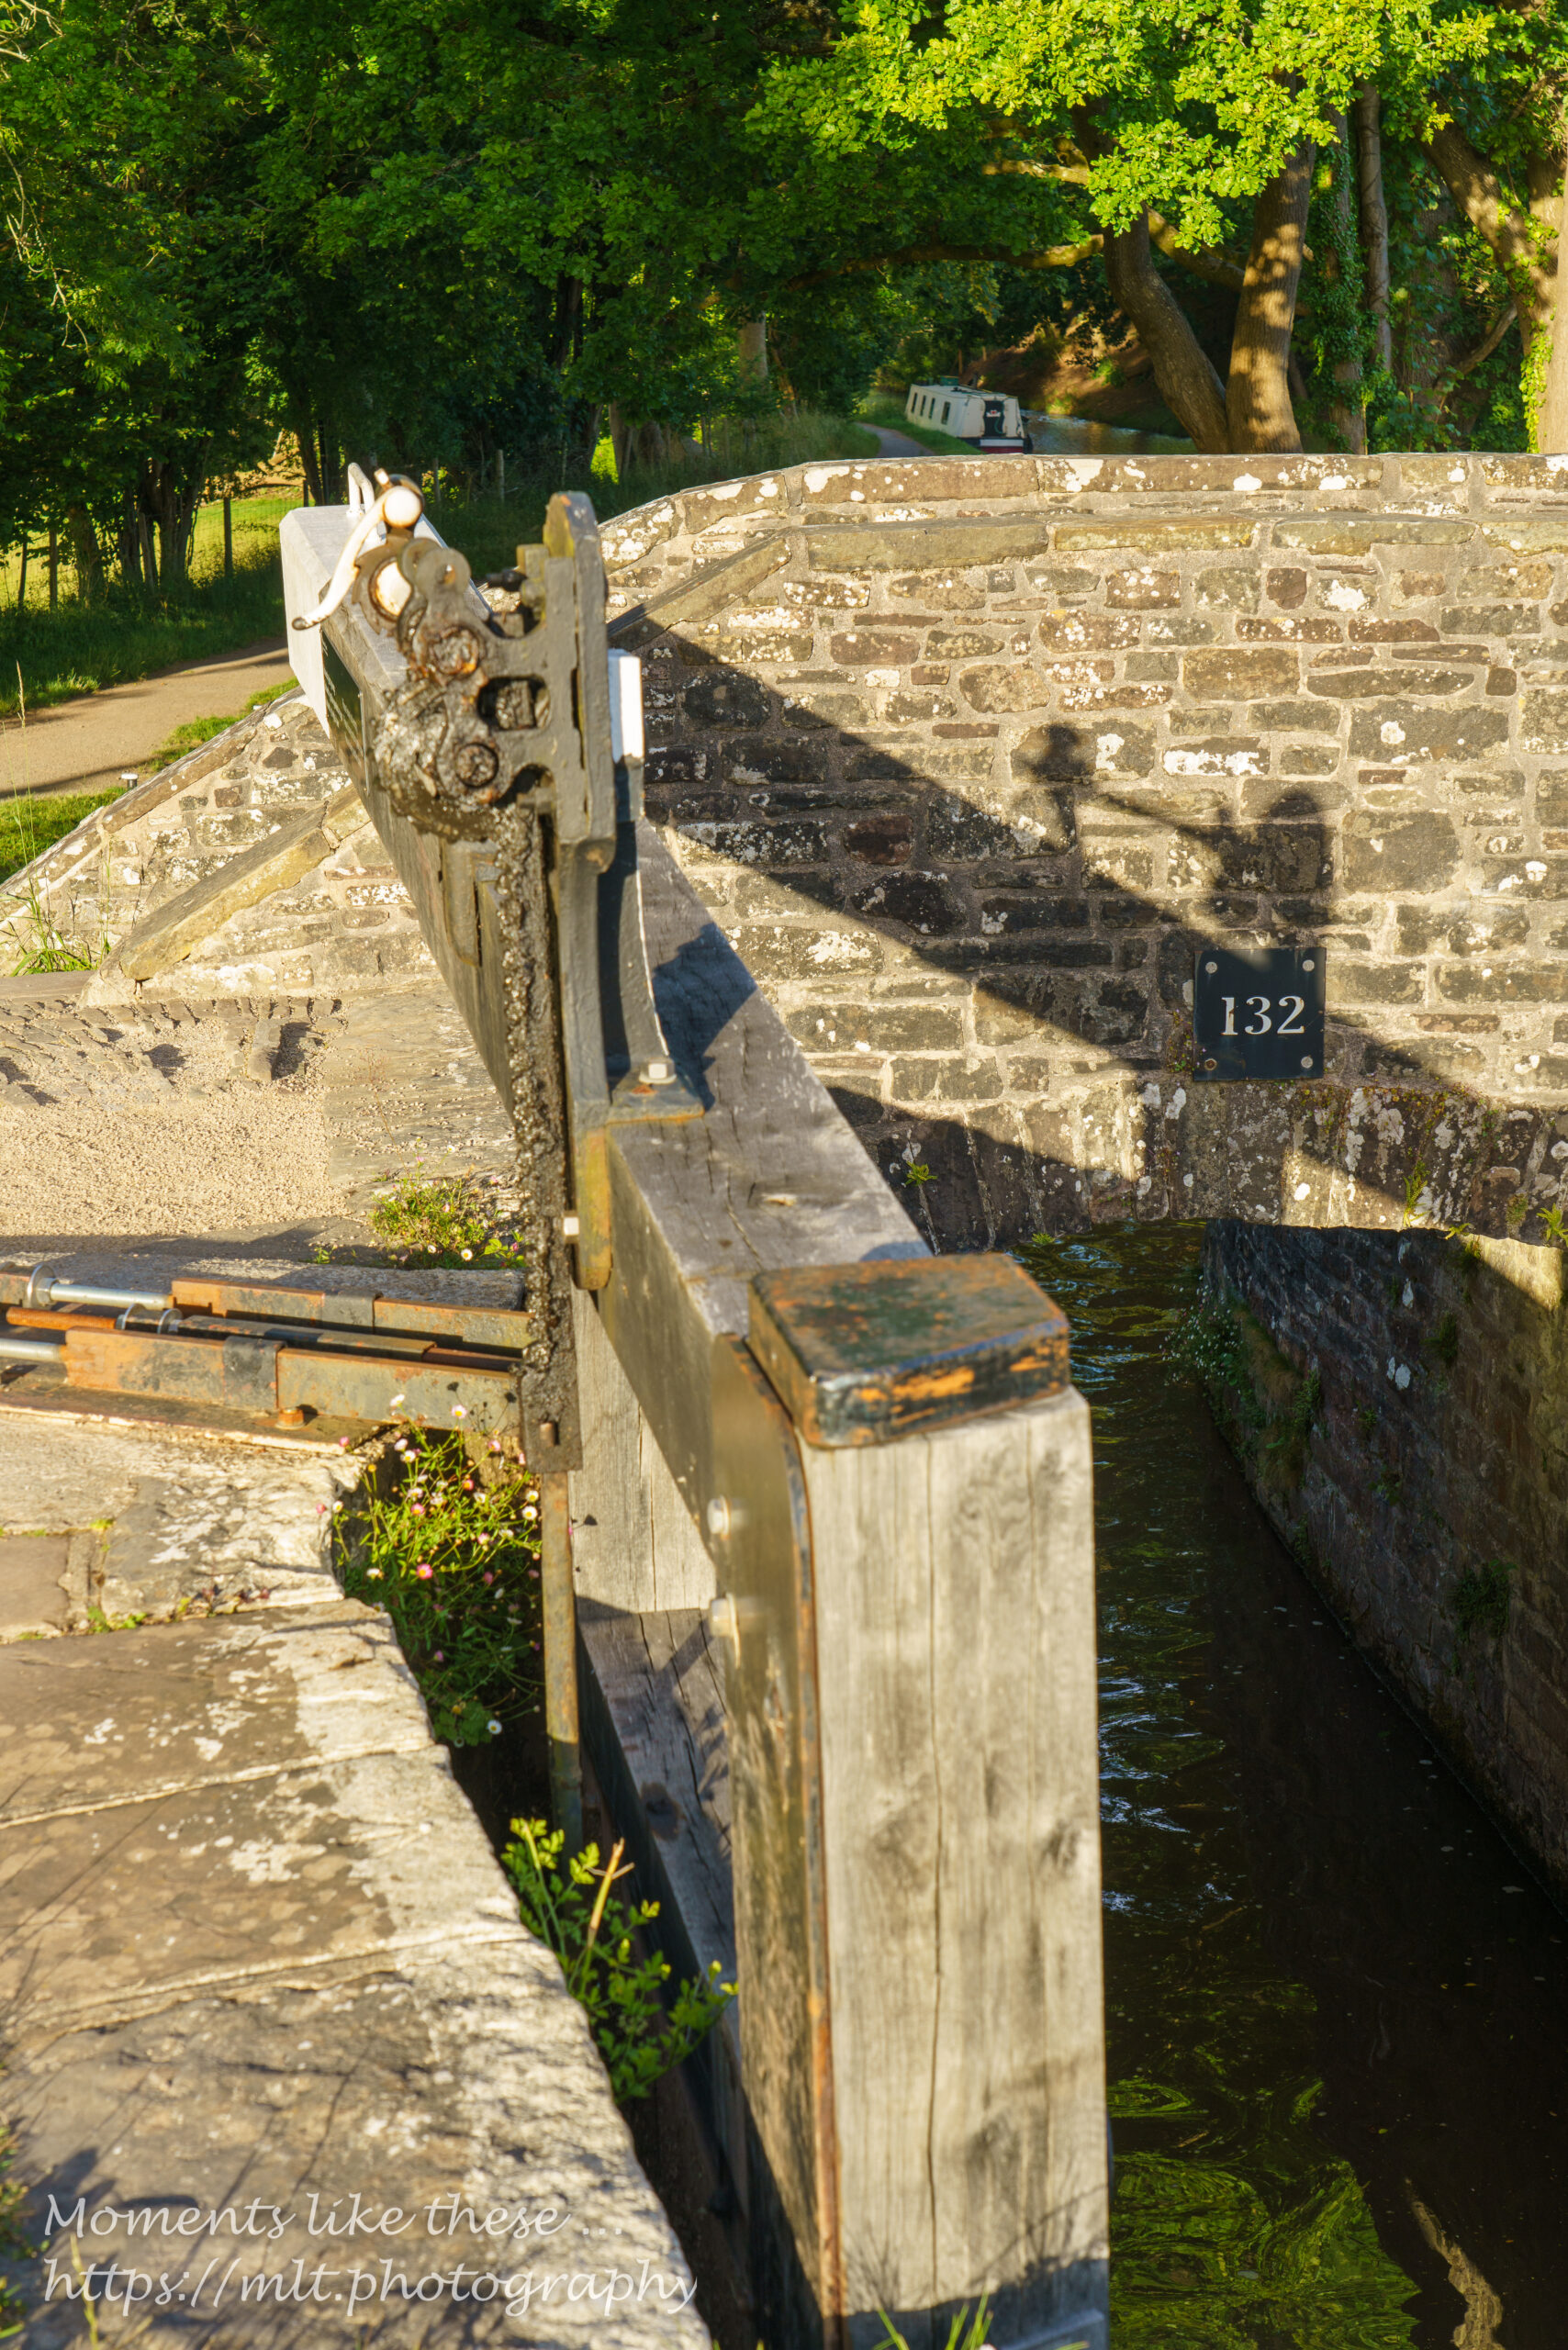 The lower lock at Llangynidr